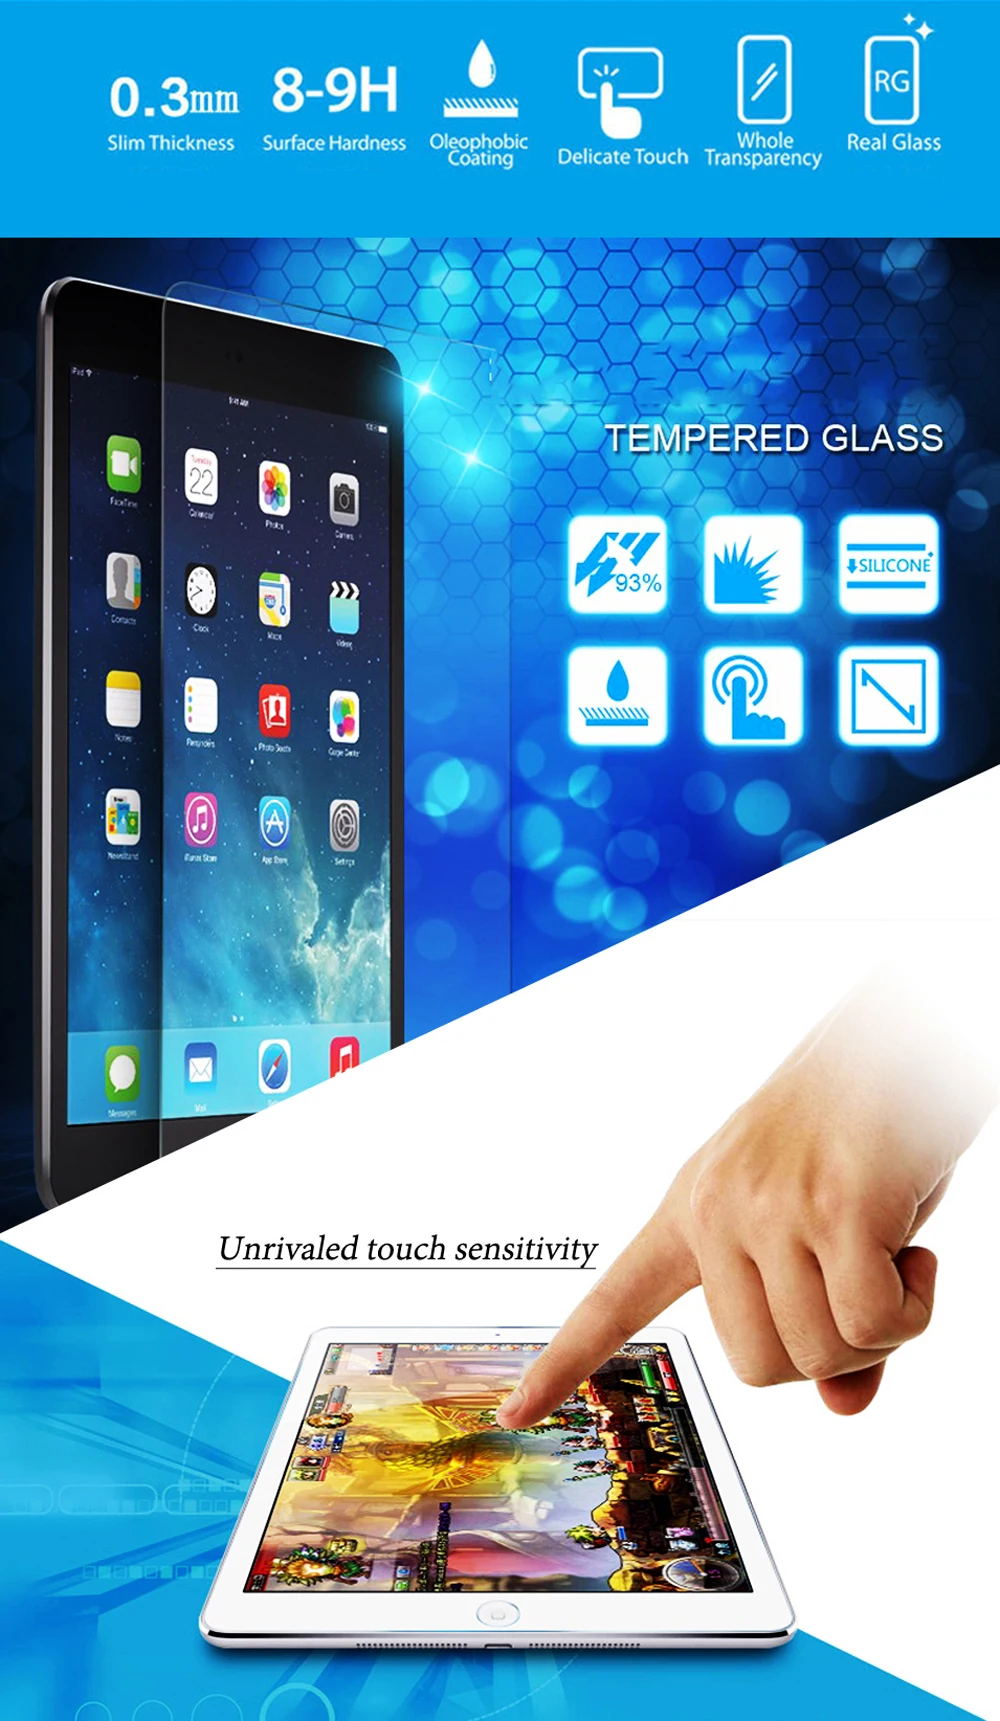 Tempered Glass For ipad air 1 2 ipad mini 2 3 4 ipad 2 3 4 5  Screen Protector 9H Anti Scratch Protective Film For New ipad 2017 (7)